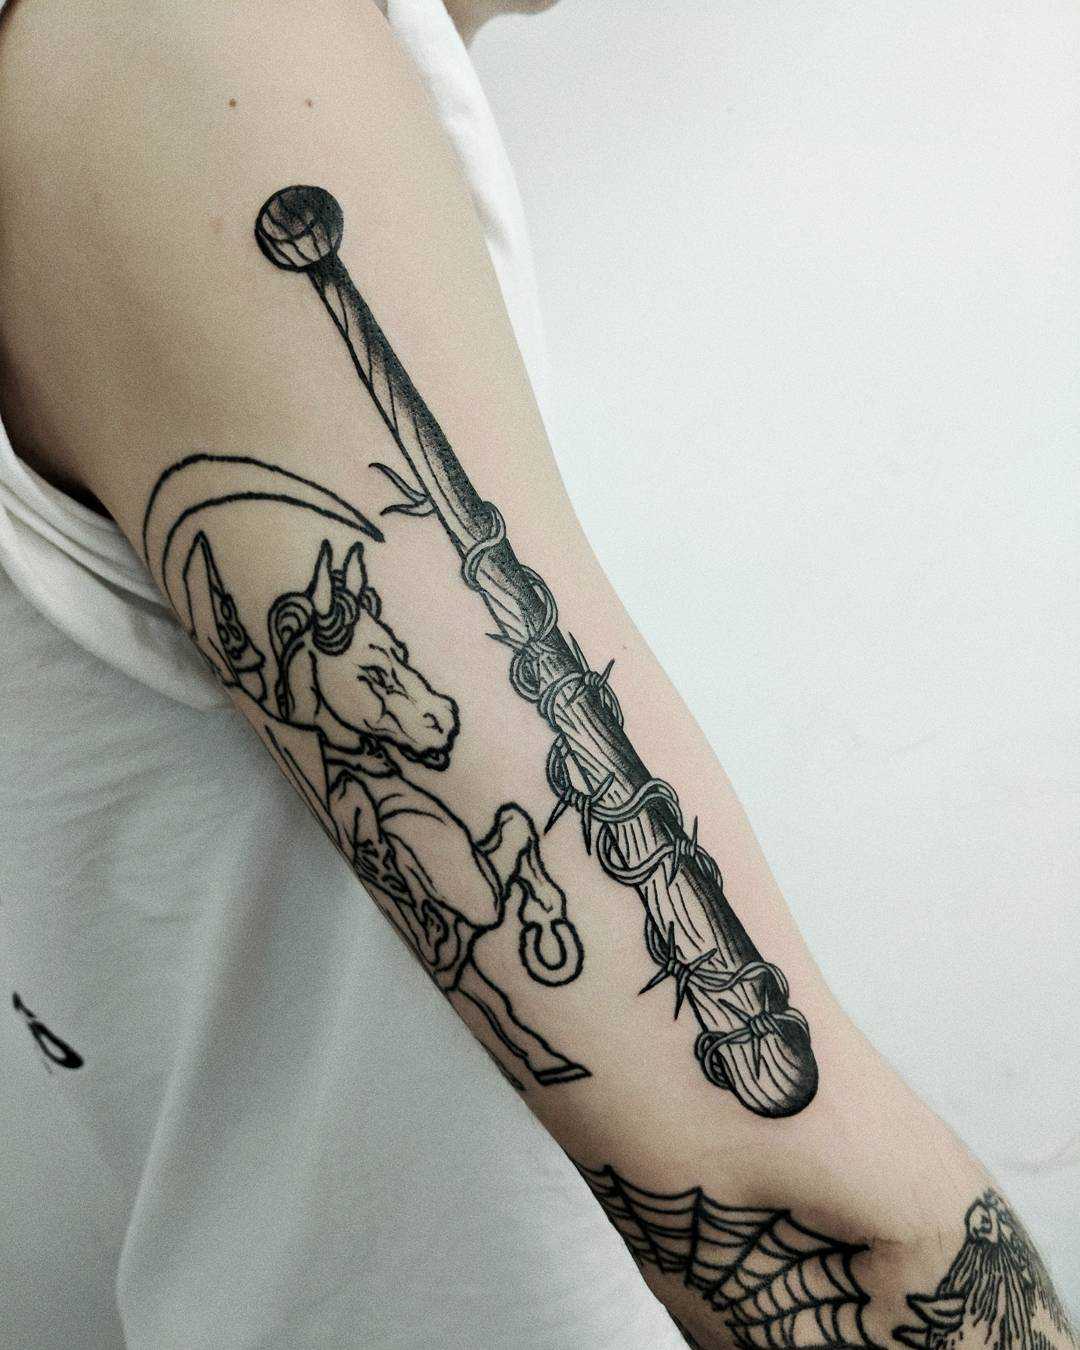 baseball bat tattoo